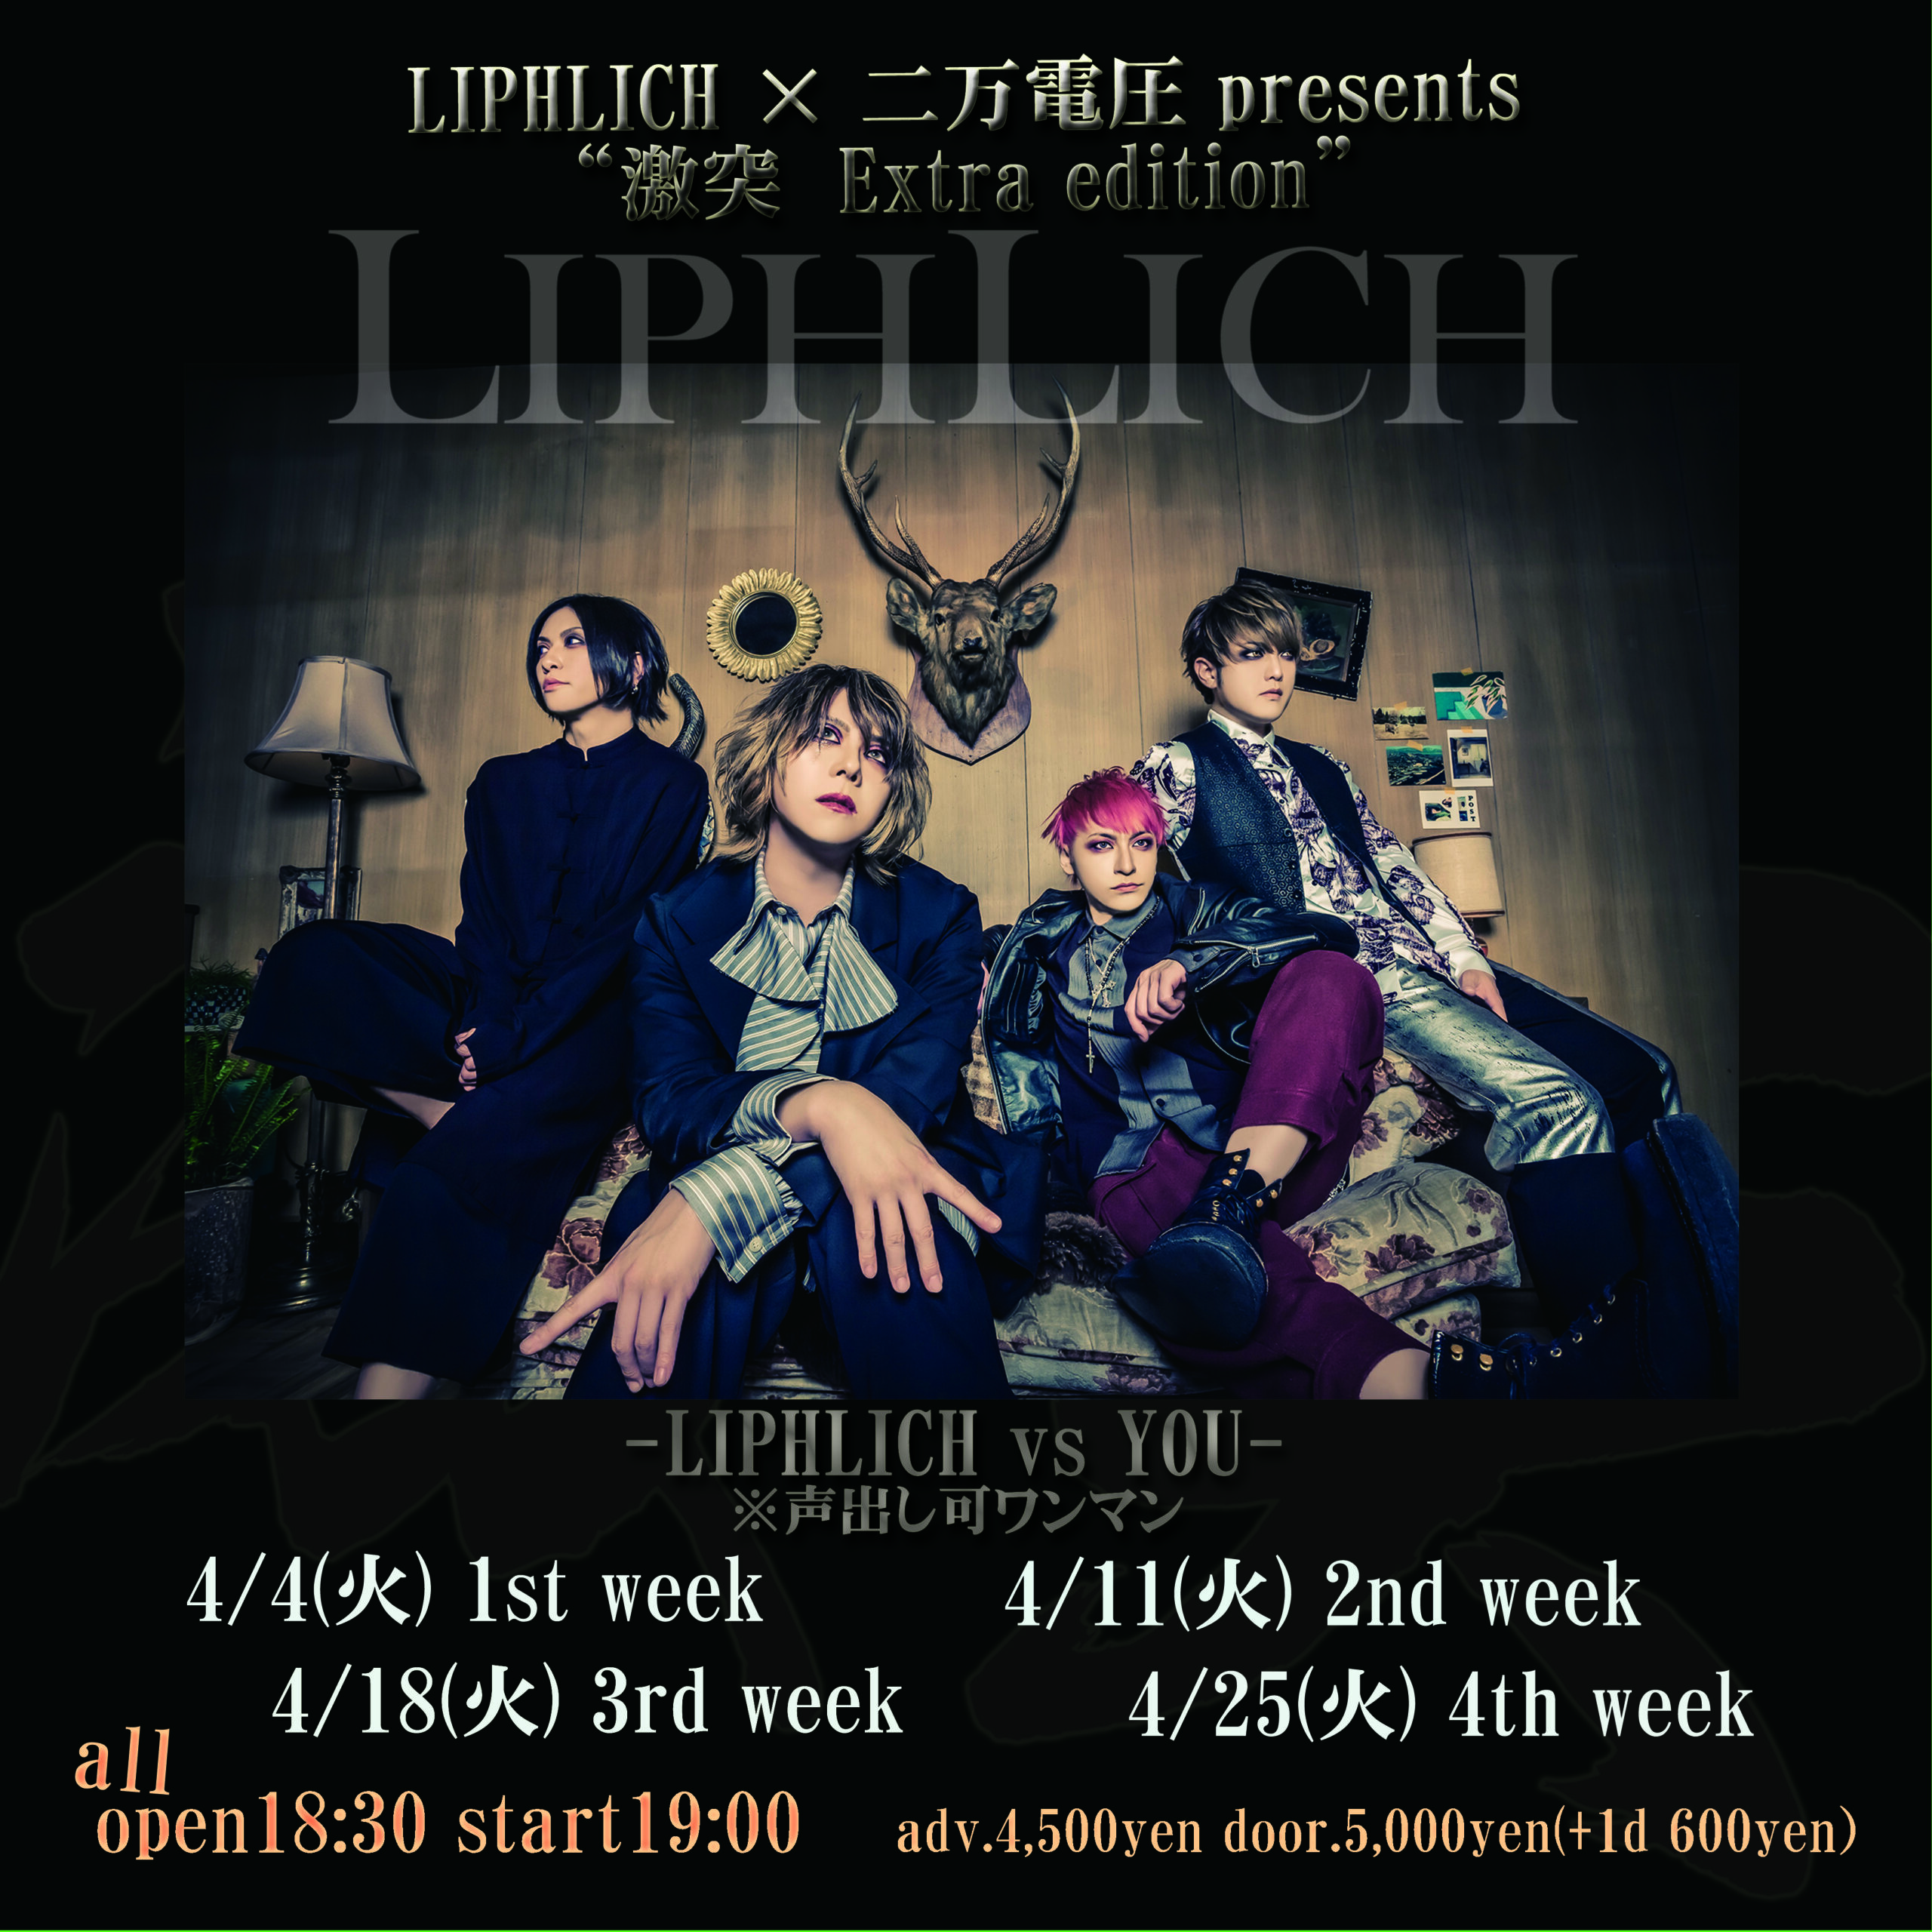 LIPHLICH × 二万電圧 presents ”激突 Extra edition” -LIPHLICH vs YOU 3rd week-  ※声出し可ワンマン